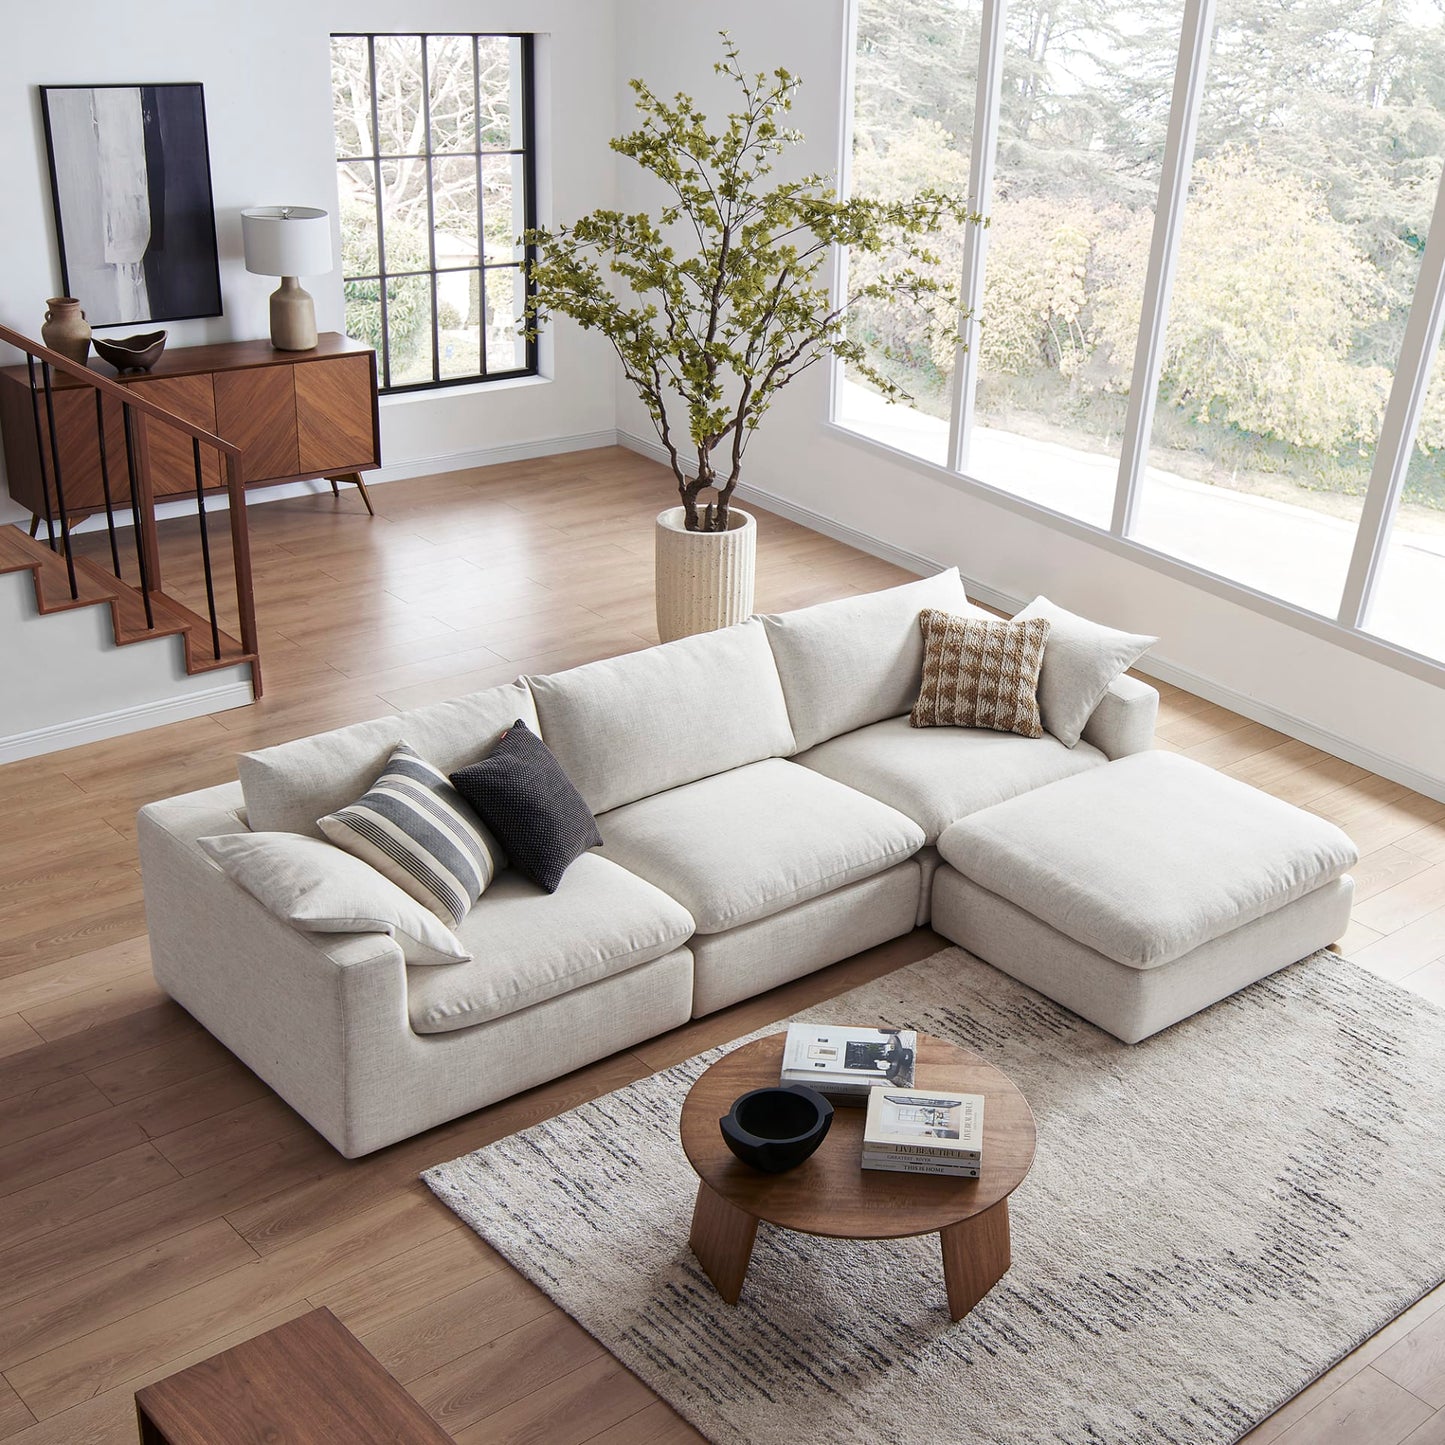 Corner sofa 220 x 160 cm - KEY05-F